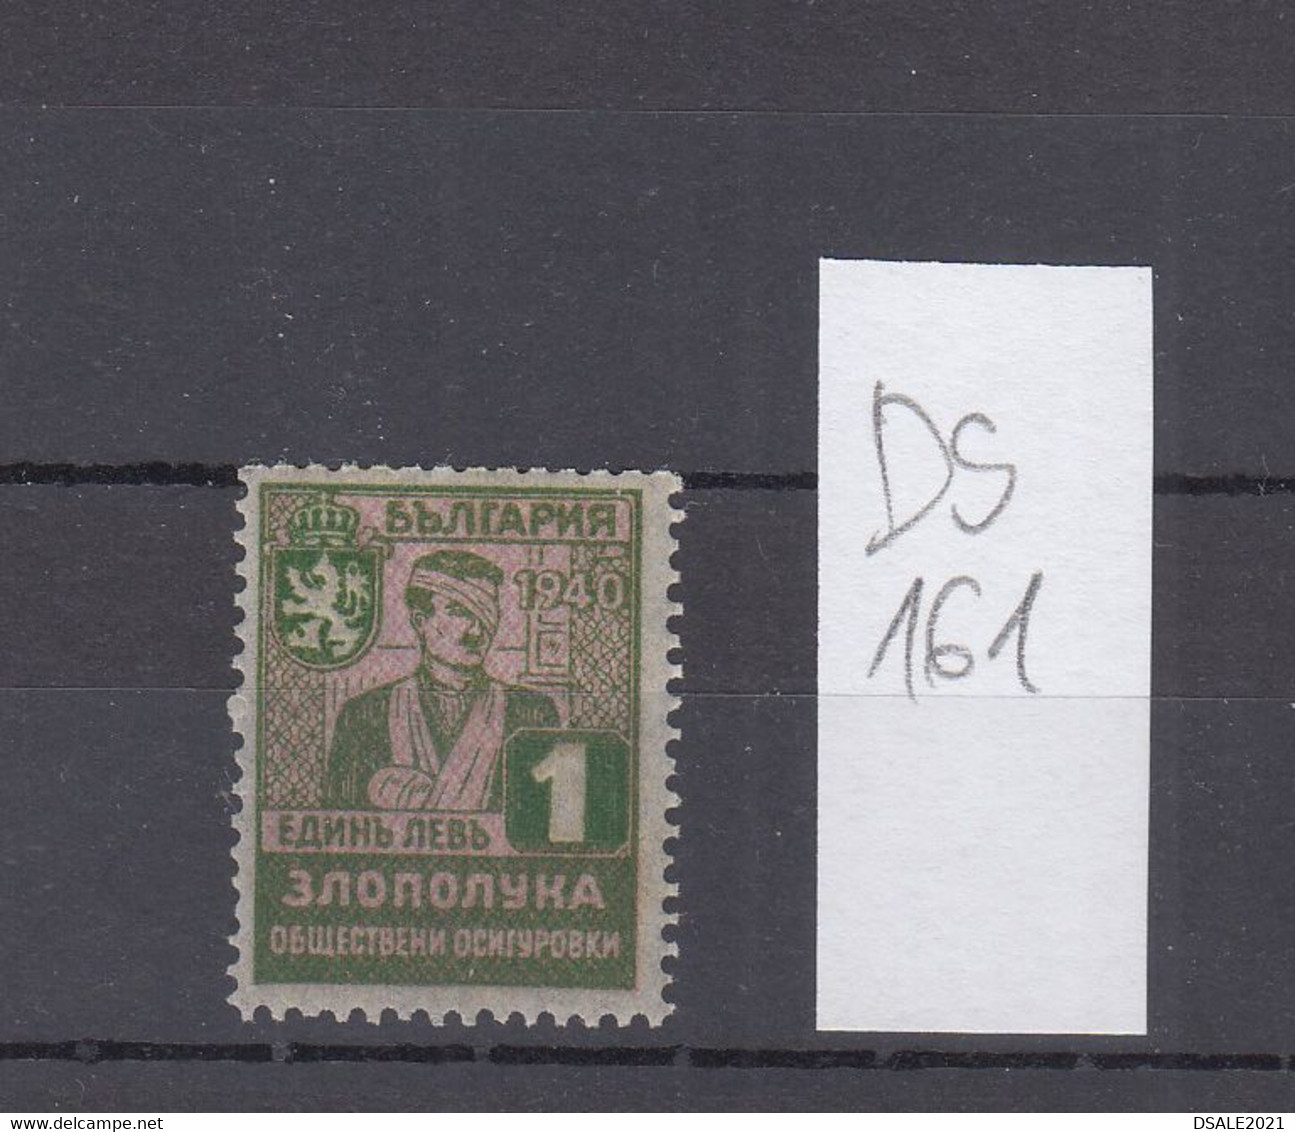 Bulgaria Bulgarie Bulgarije 1940 Social Insurance 1Lv. Accident Insurance Stamp Fiscal Revenue Bulgarian (ds161) - Dienstzegels